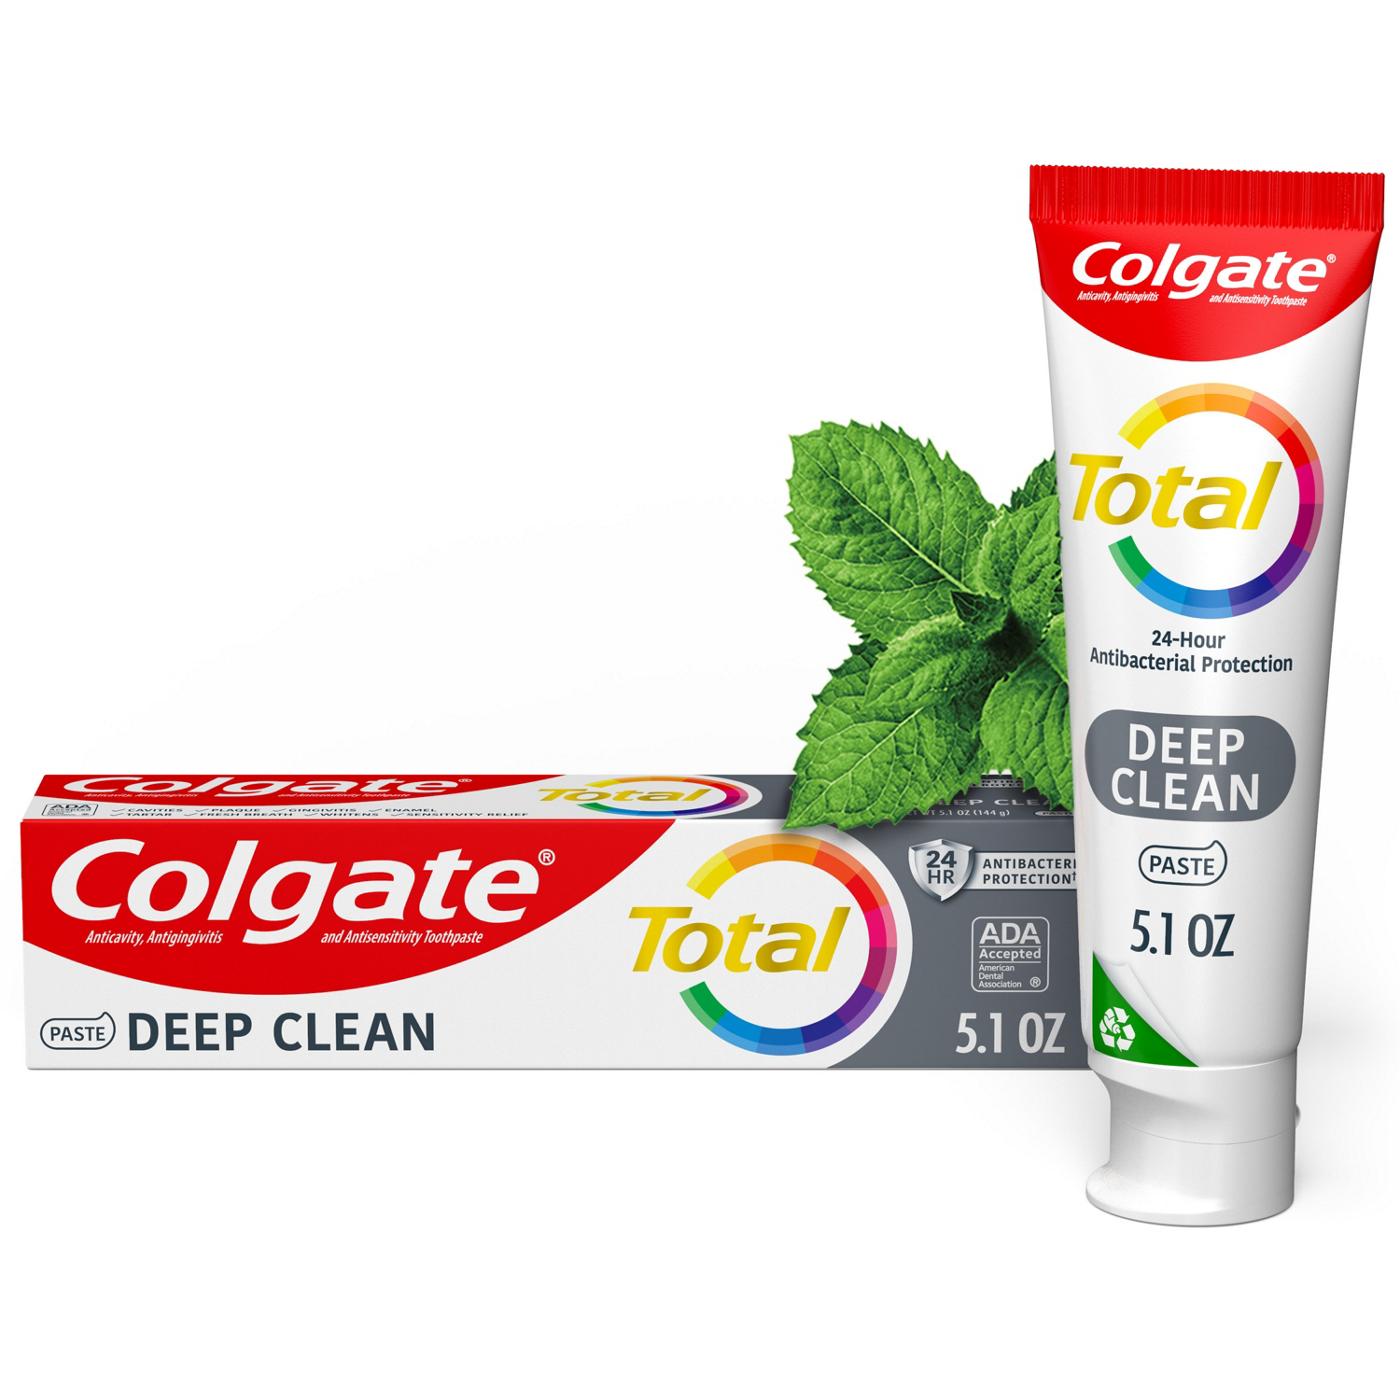 Colgate Total Deep Clean Toothpaste; image 2 of 12